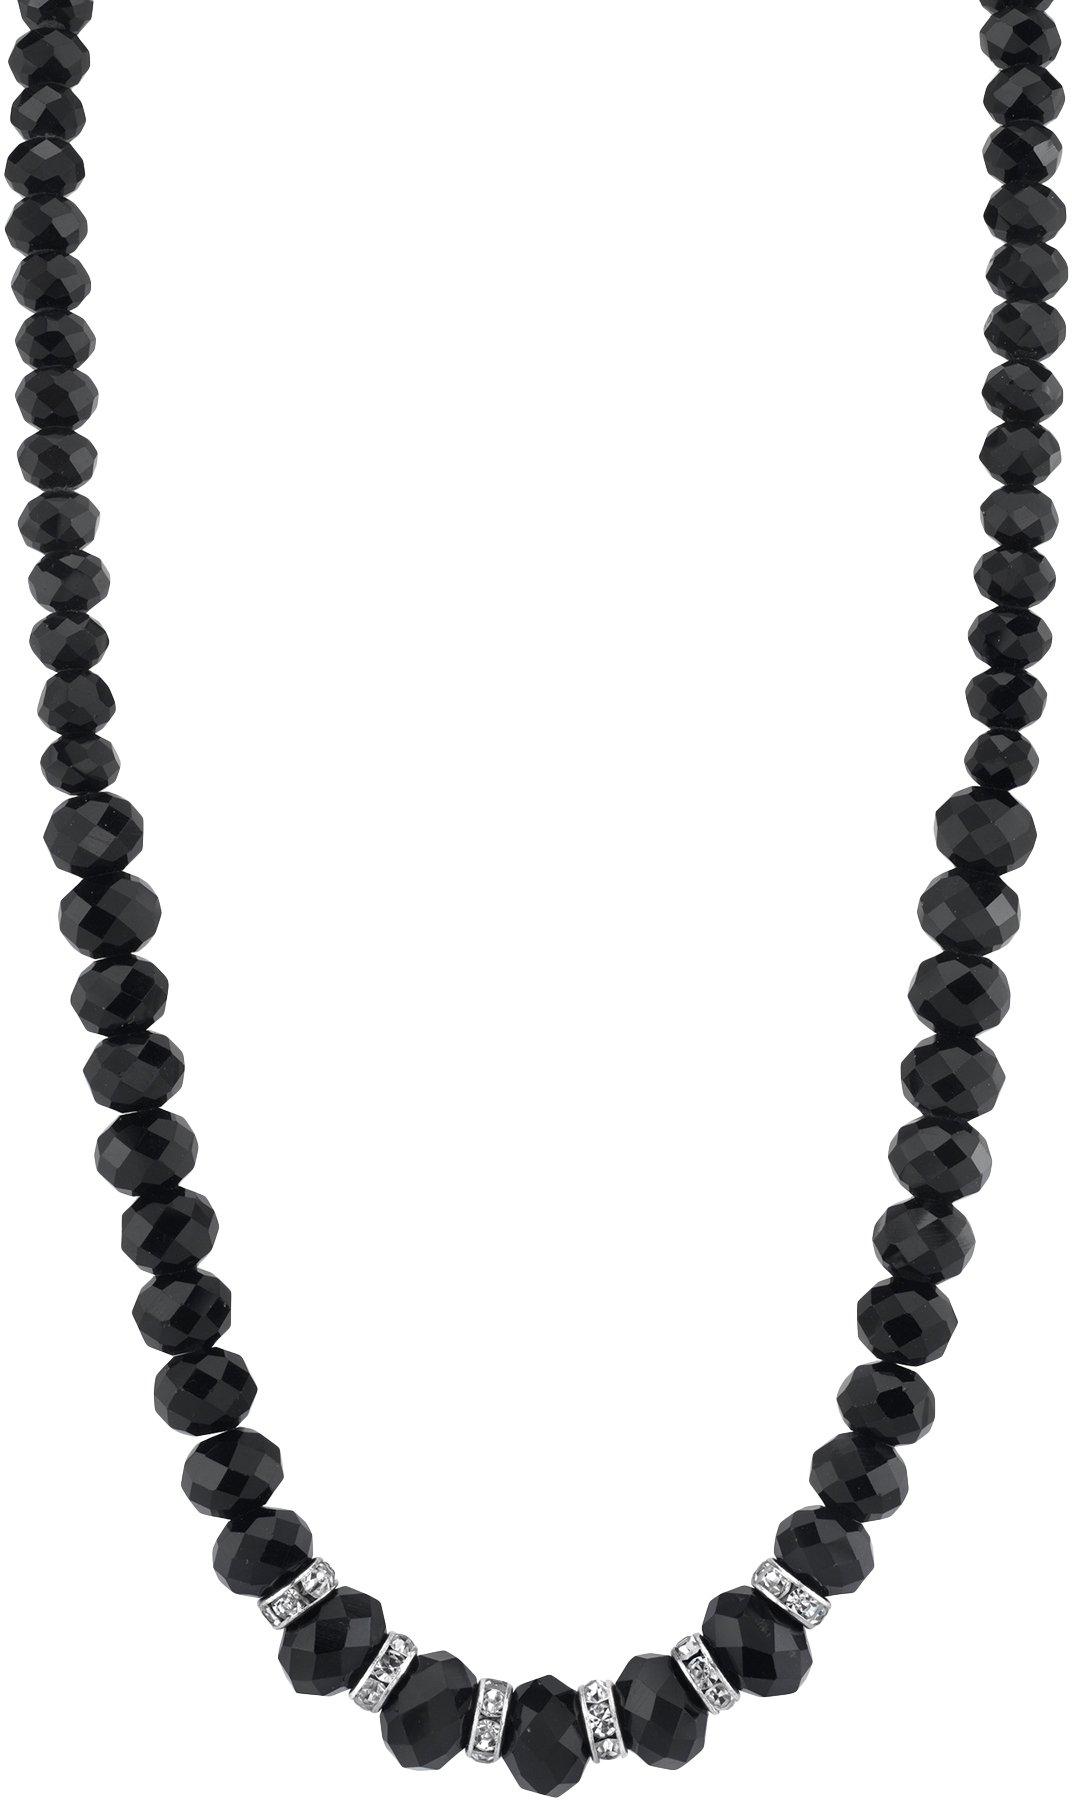 16 3 Extender 1928 Jewelry Hematite-Tone Black Oval Pendant Necklace